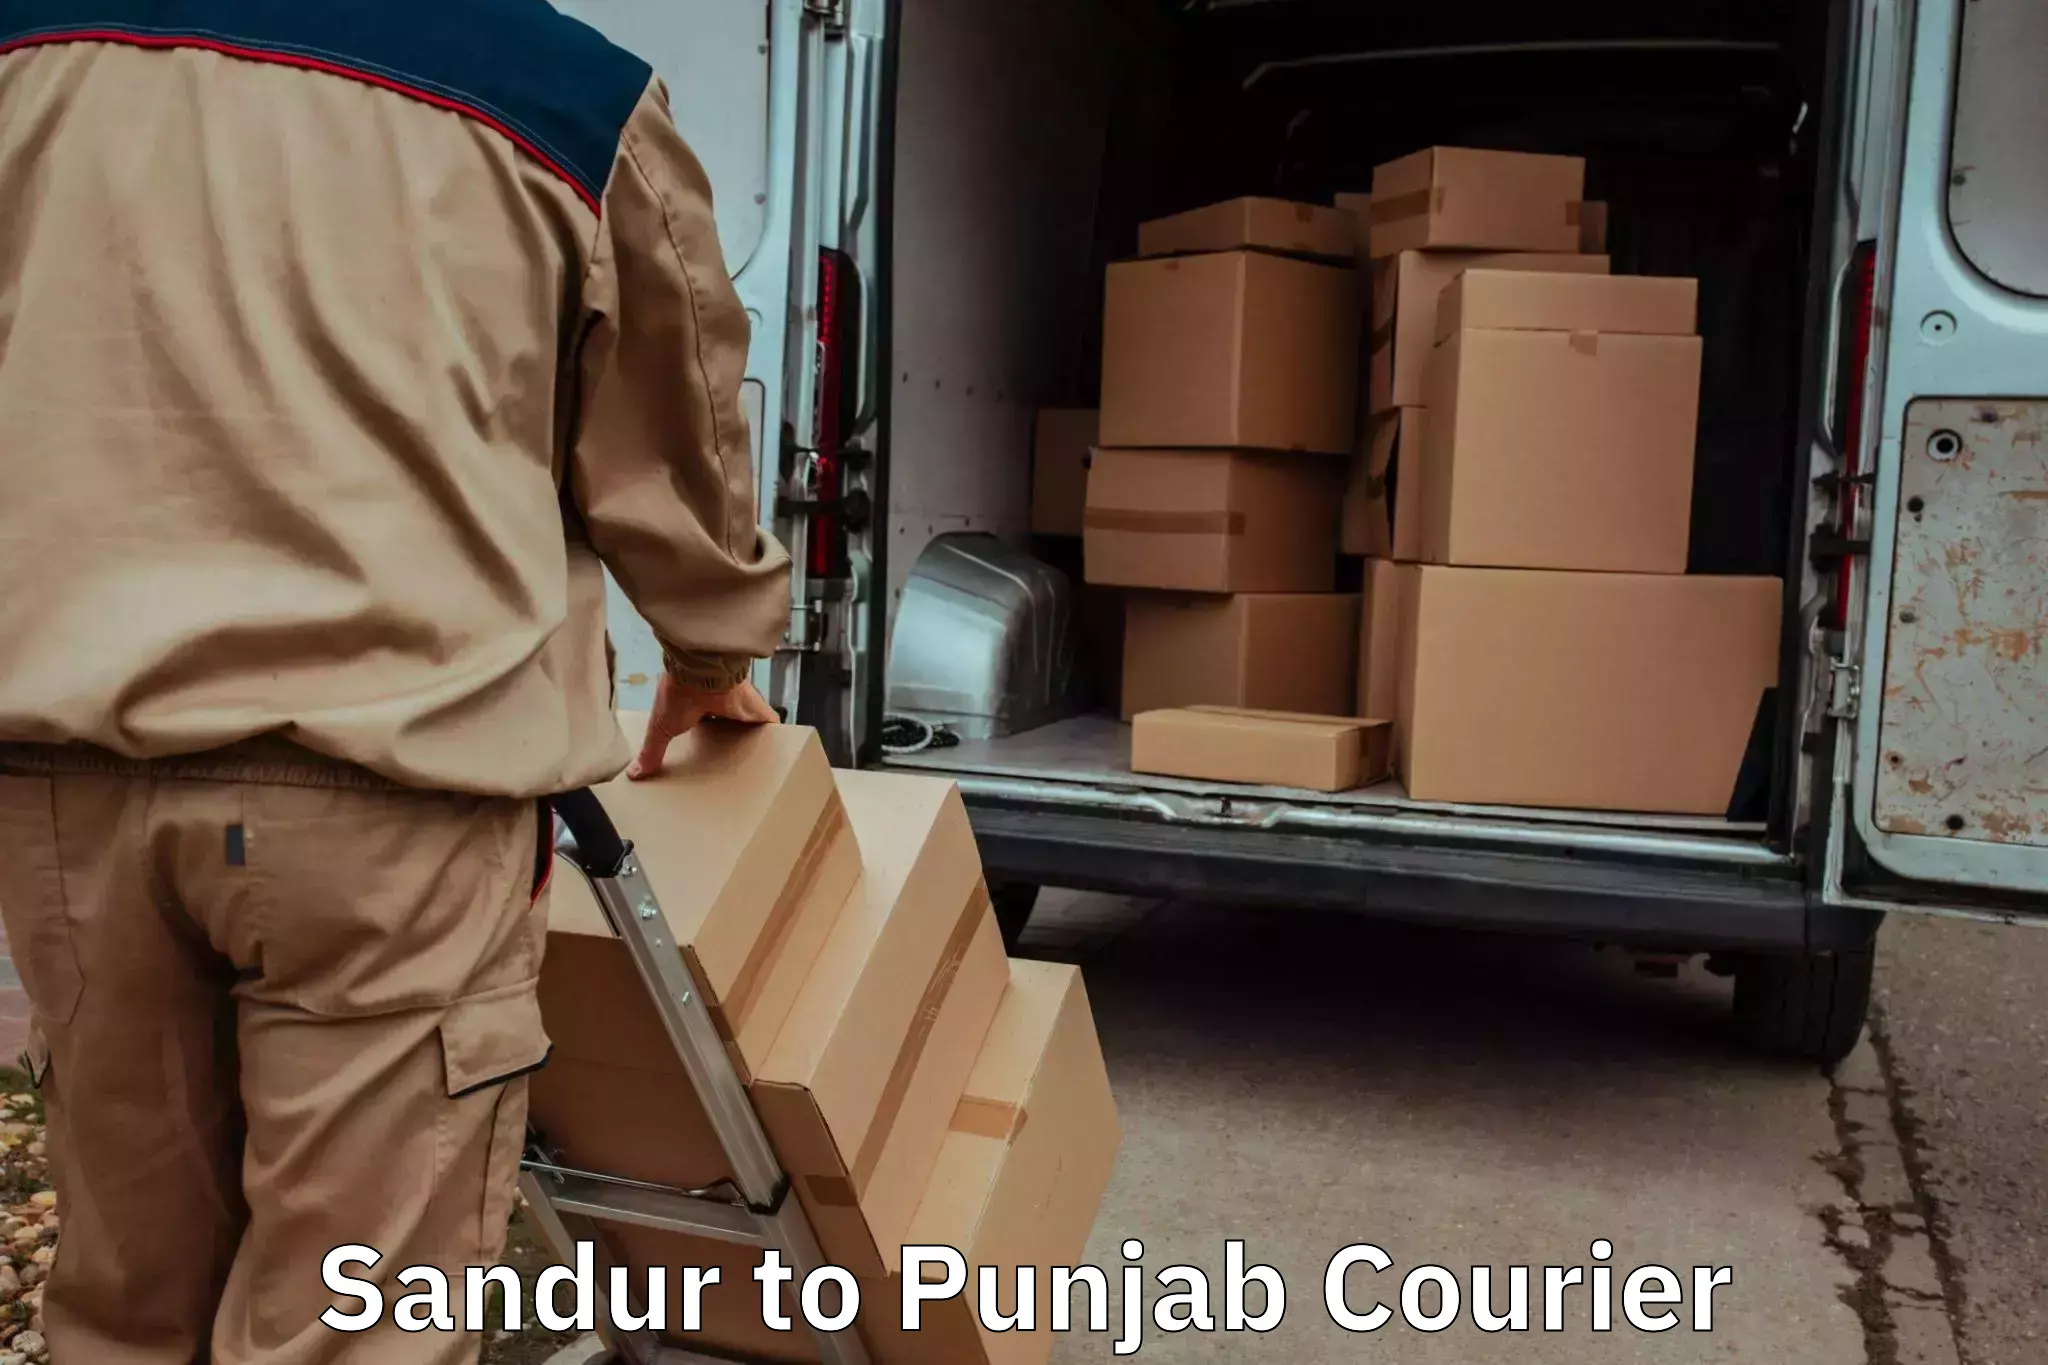 Household goods transport service Sandur to Khanna